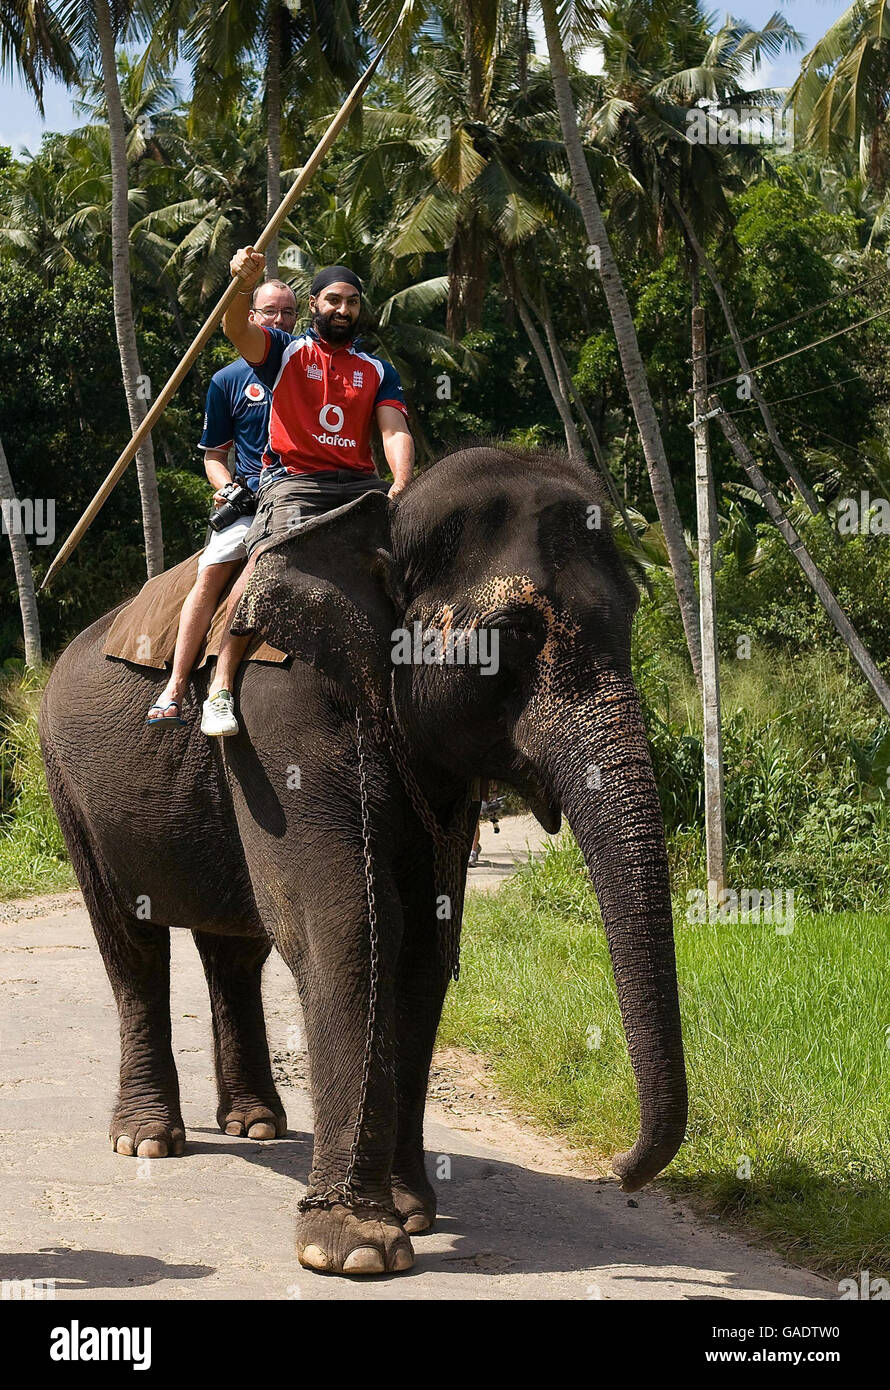 Cricket - England Visit Pinawella Village - Kandy. England's Monty Panesar and coach Mark Saxby ride an elephant during a visit to Pinawella village near Kandy, Sri Lanka. Stock Photo